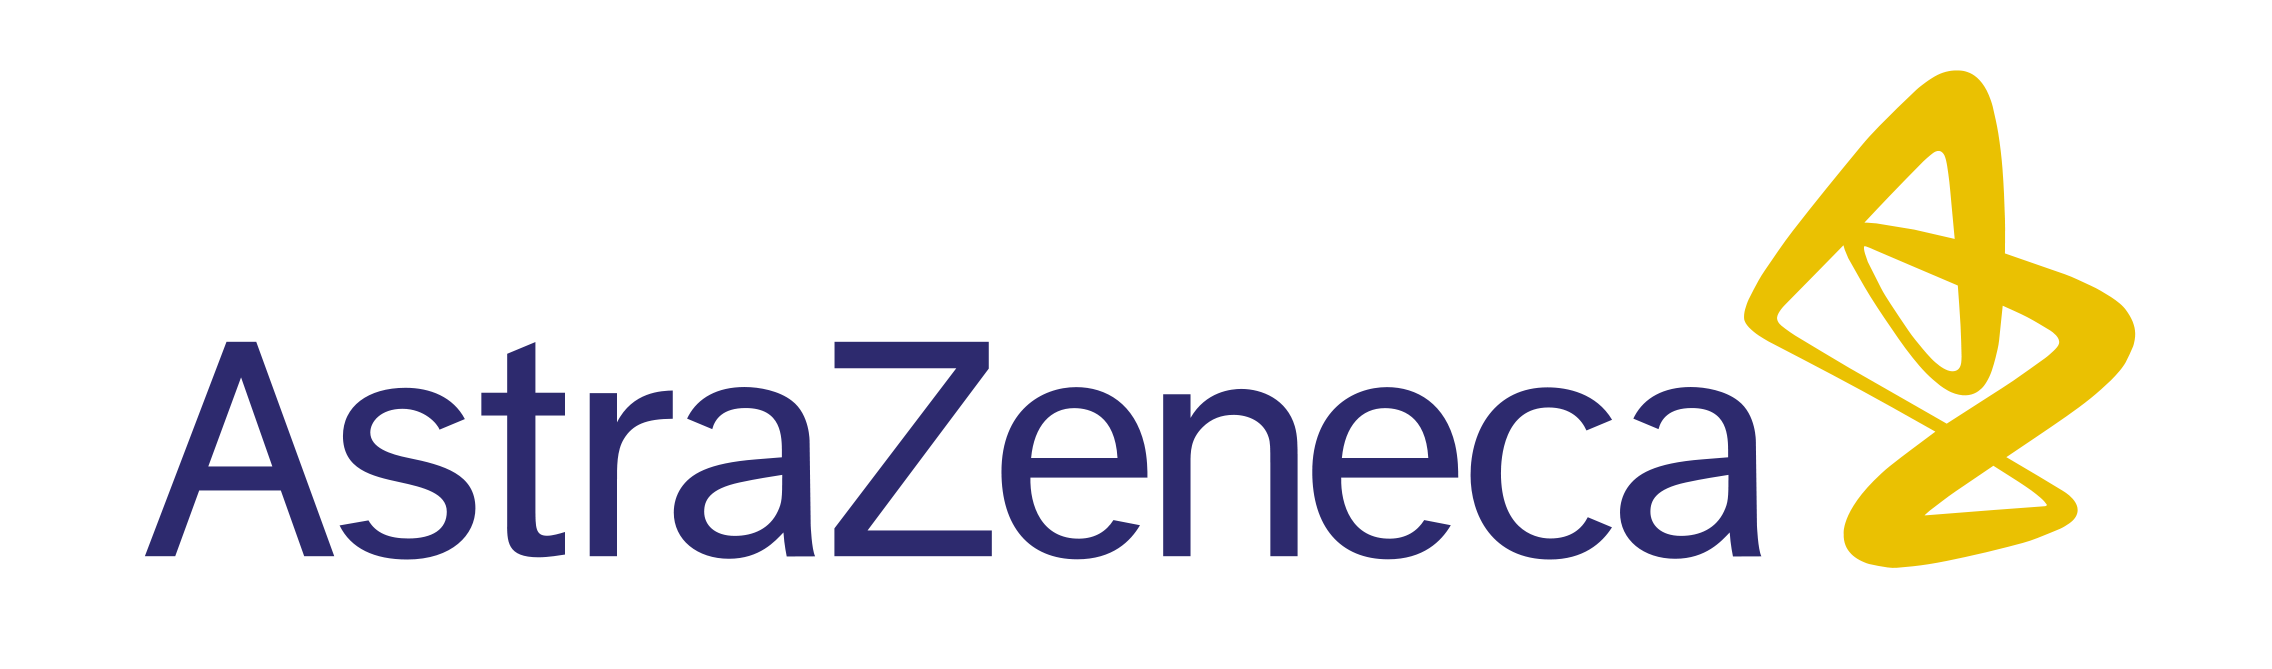 AstraZeneca-logo-and-wordmark